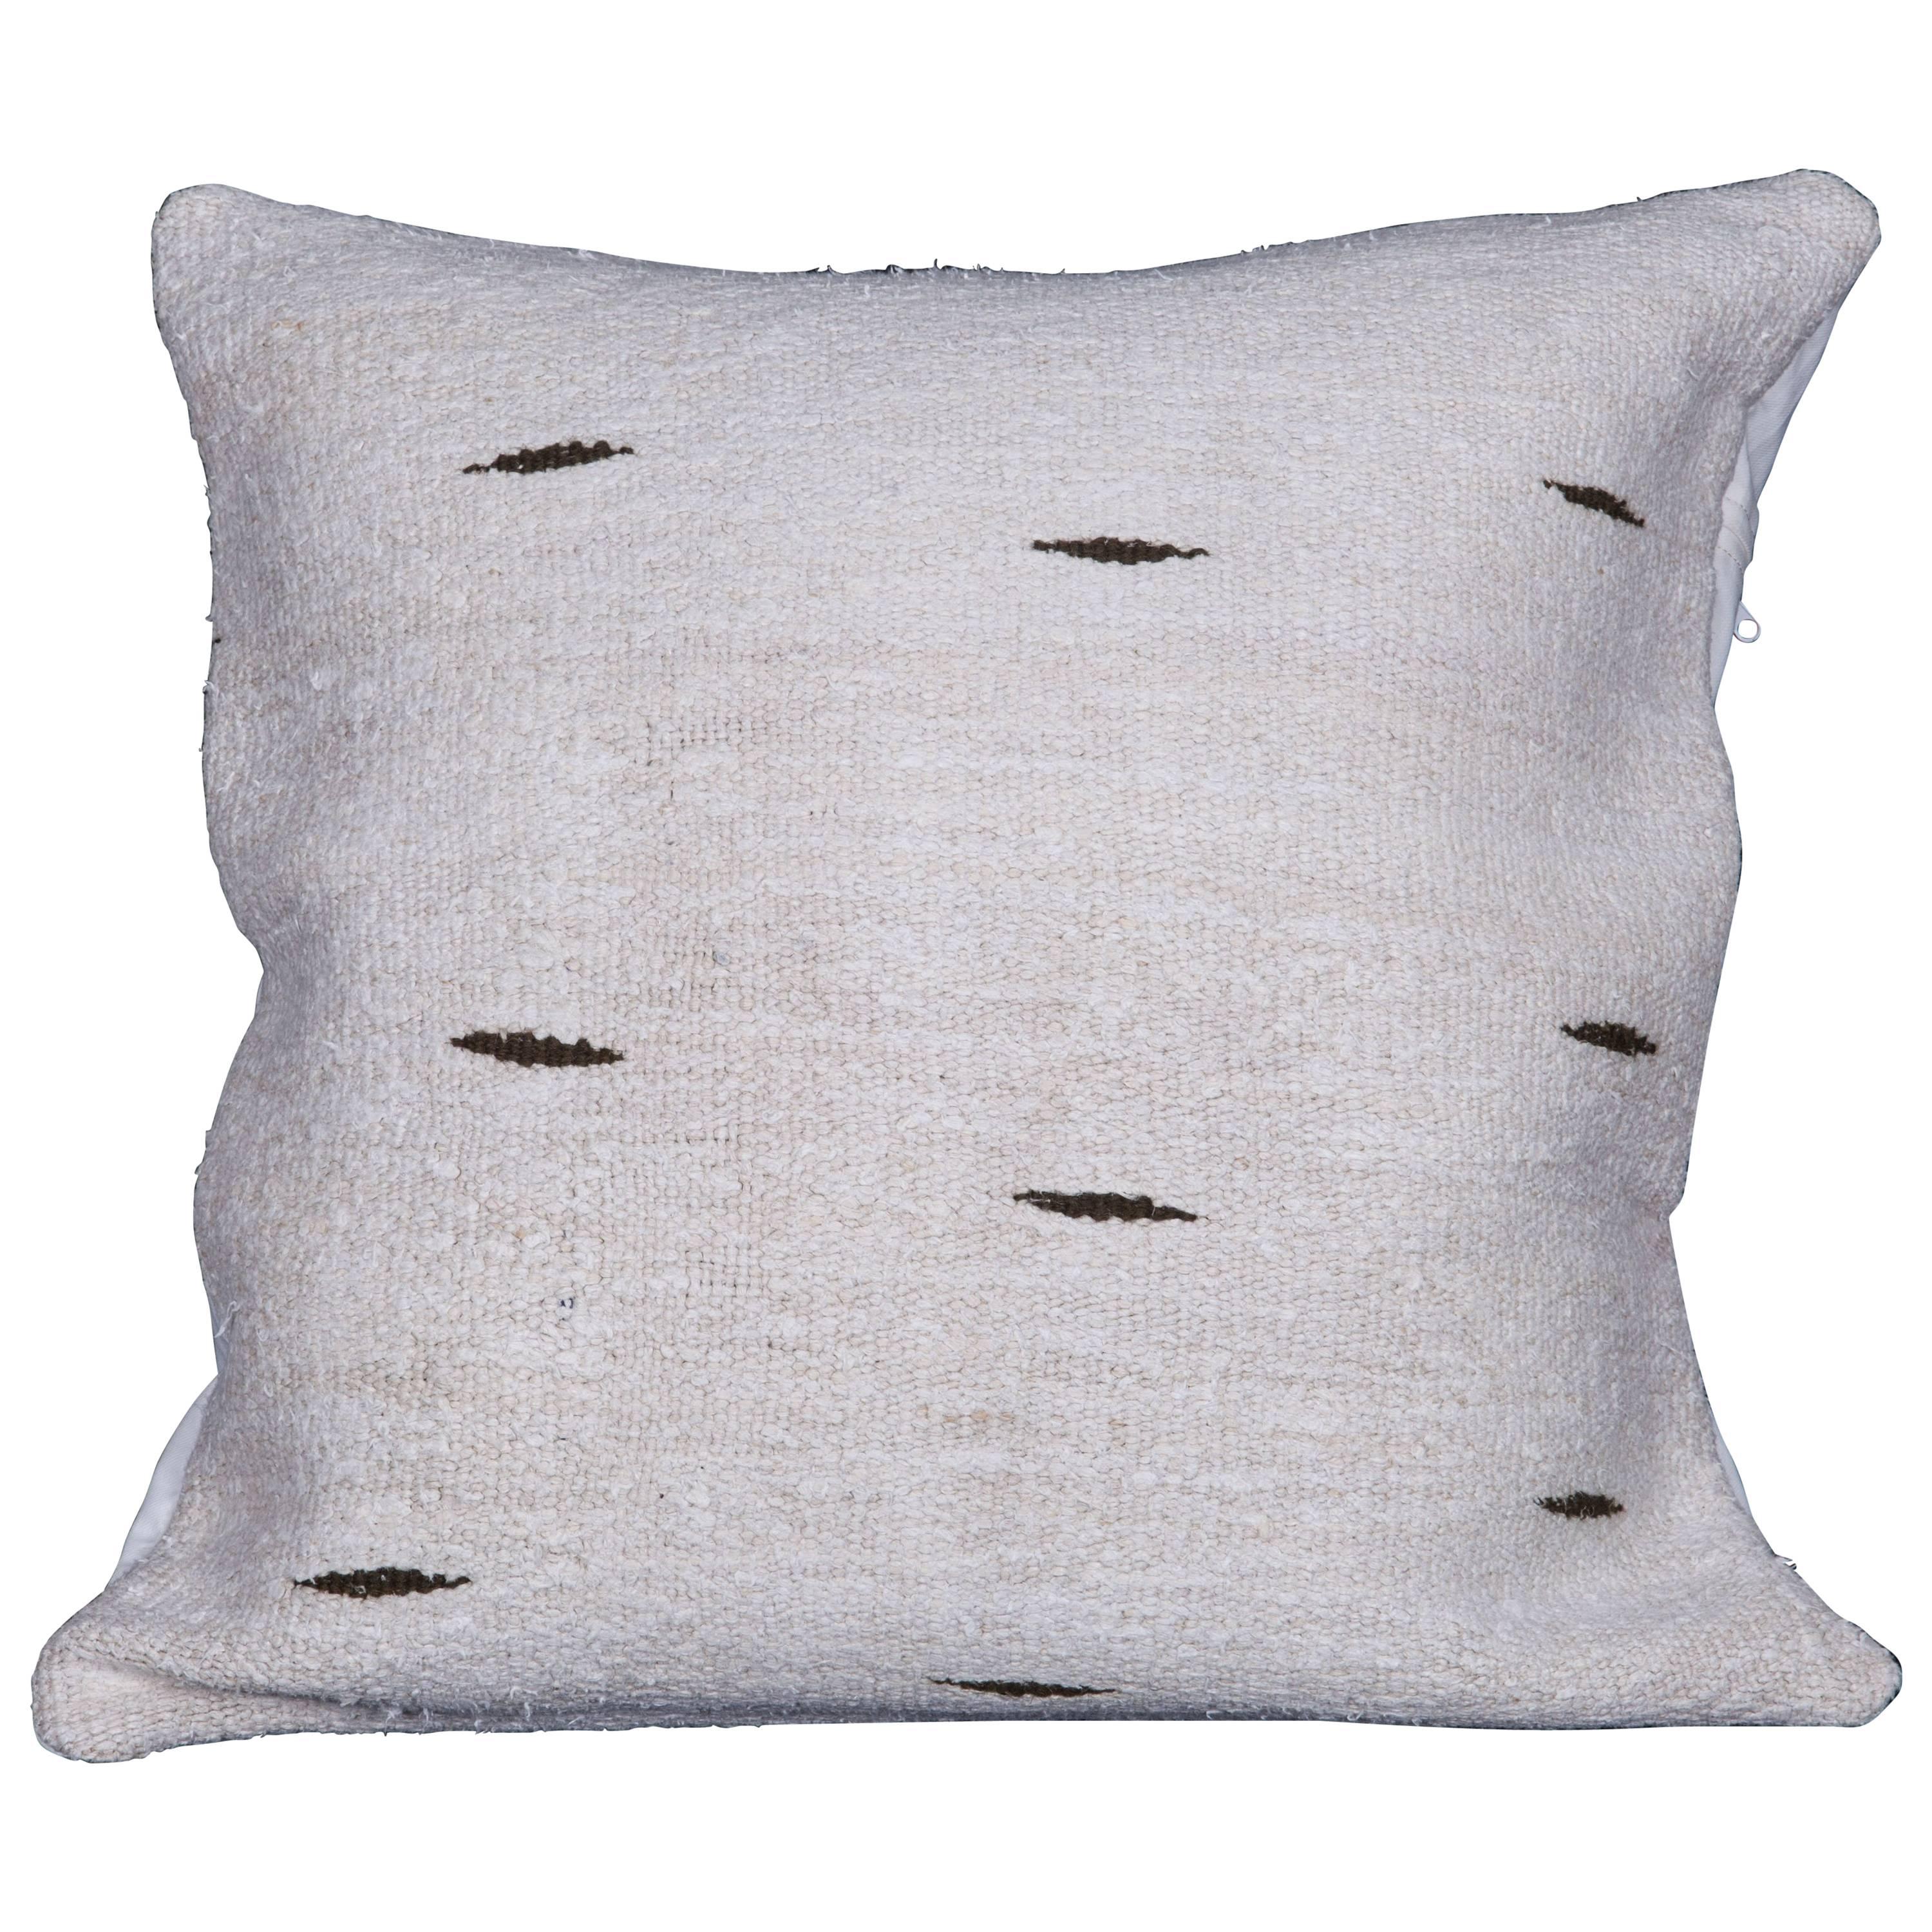 Pillow Made Out of a Mid-20th Century Anatolian Hemp Kilim